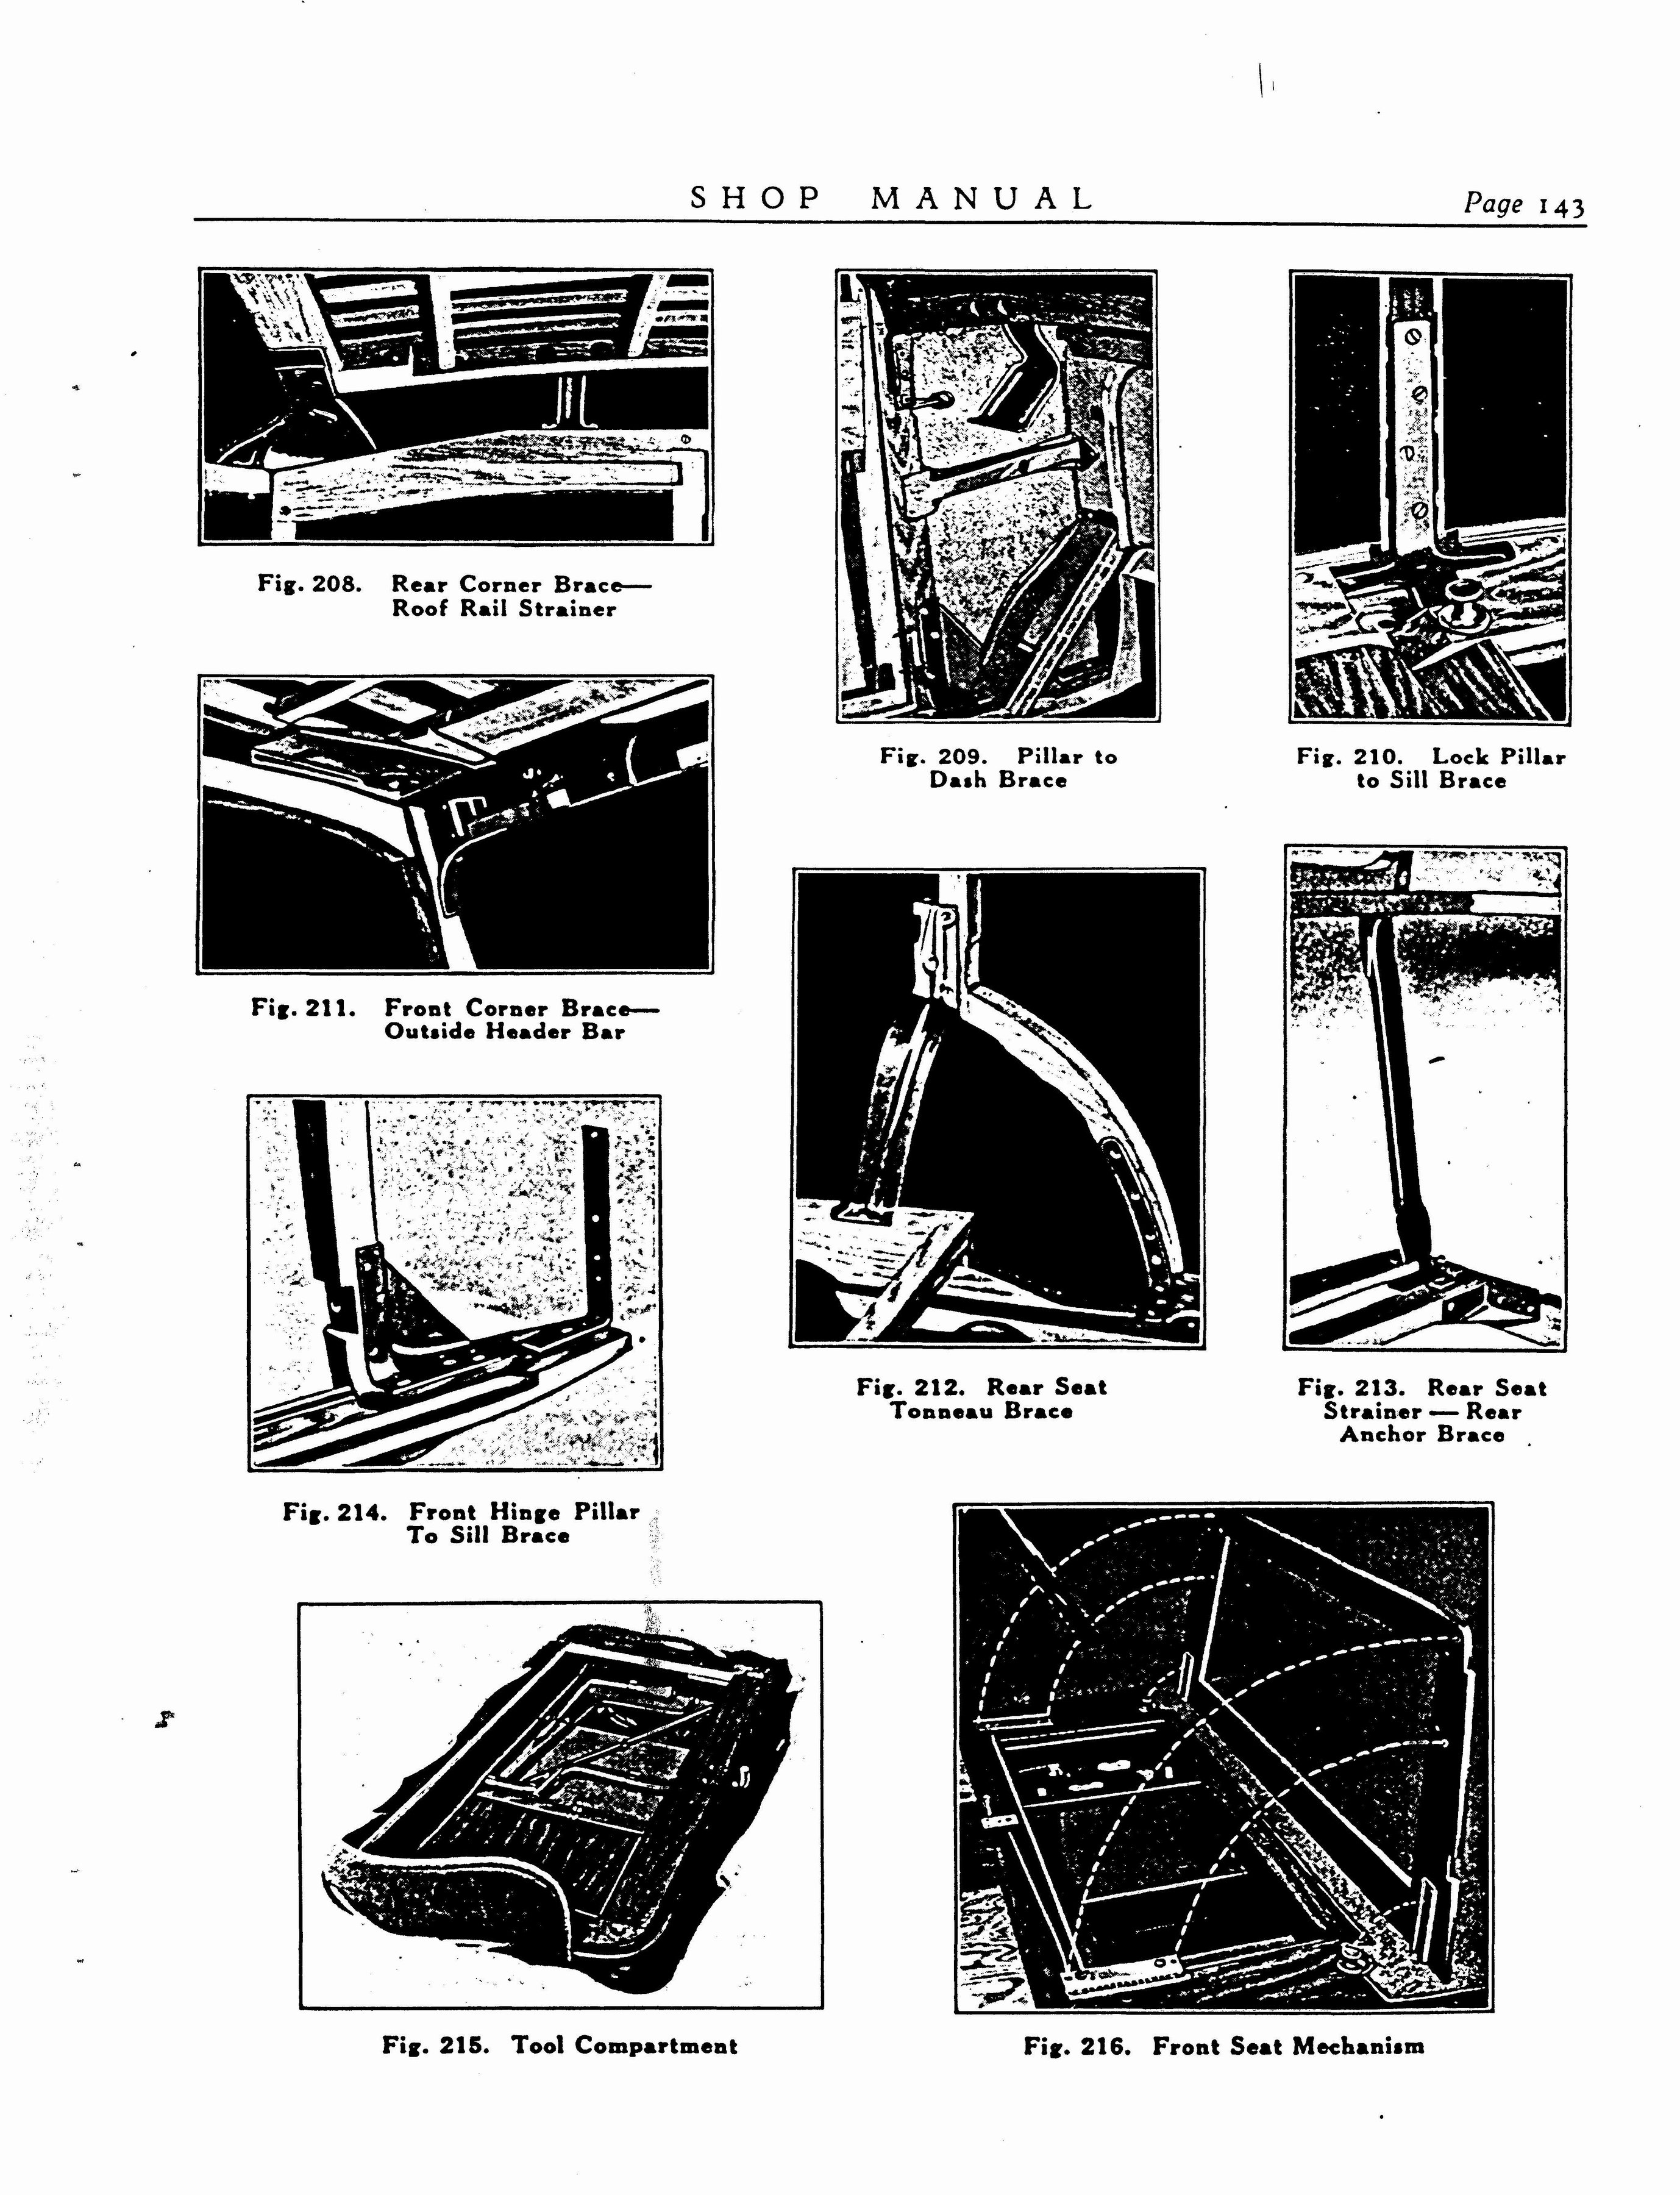 n_1933 Buick Shop Manual_Page_144.jpg